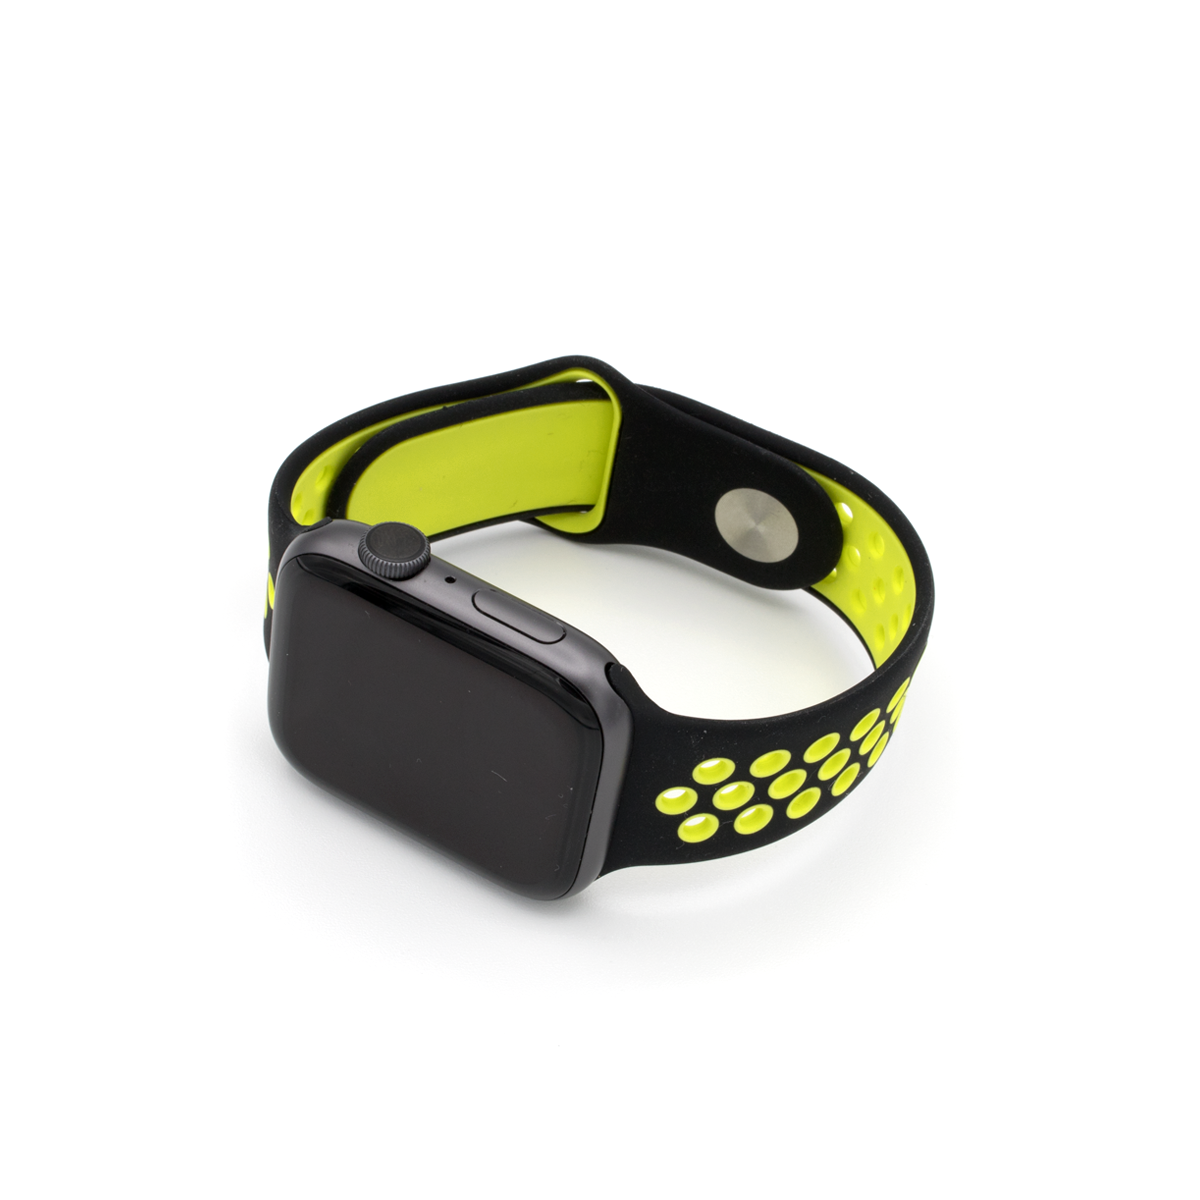 Sport Apple Watch Band - Black/Neon Yellow | Memebands